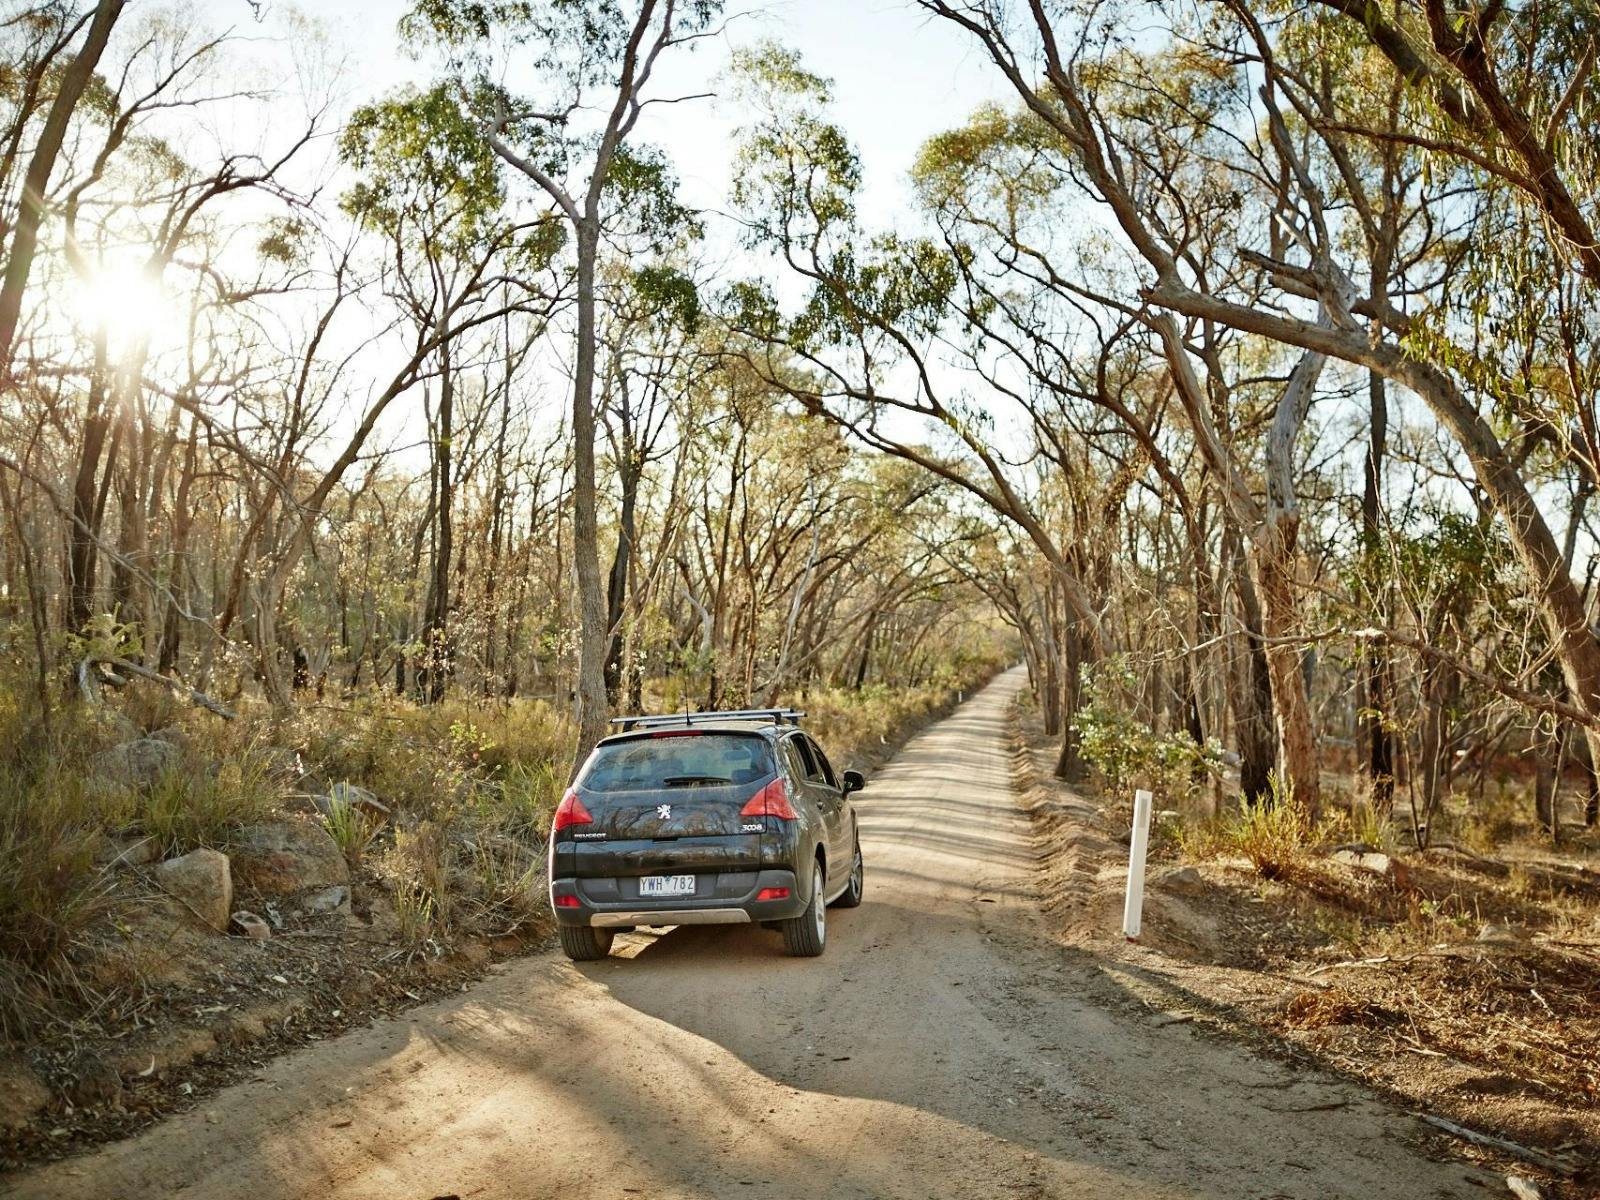 Car on dirt road, bushland trees, native grasses, rocks, sunny day.